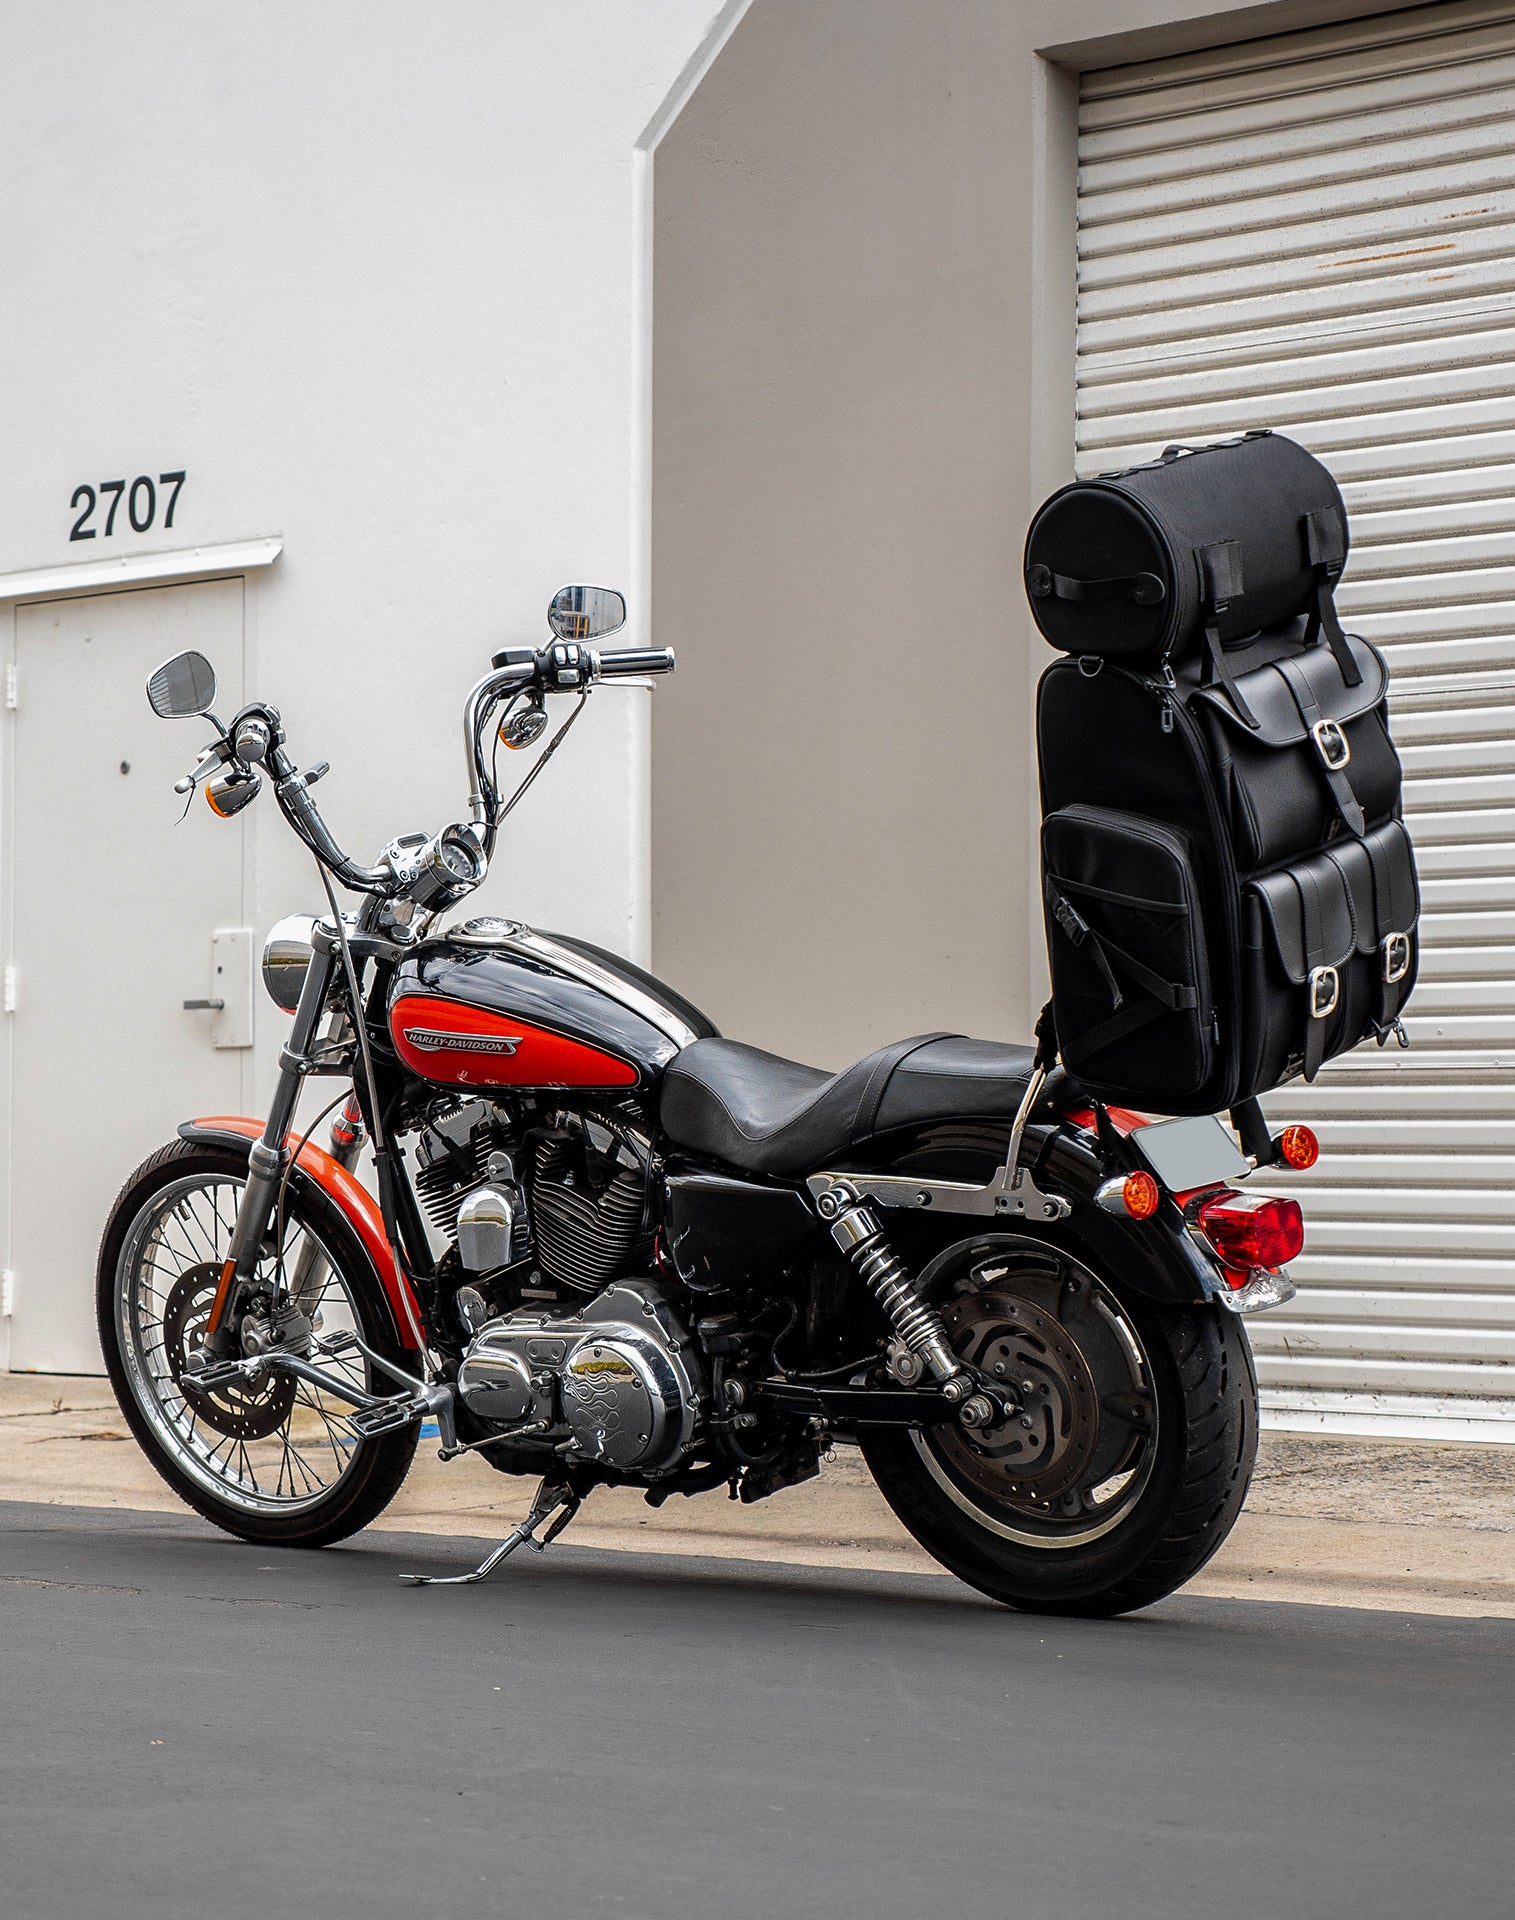 55L - Highway Extra Large Plain Suzuki Motorcycle Sissy Bar Bag